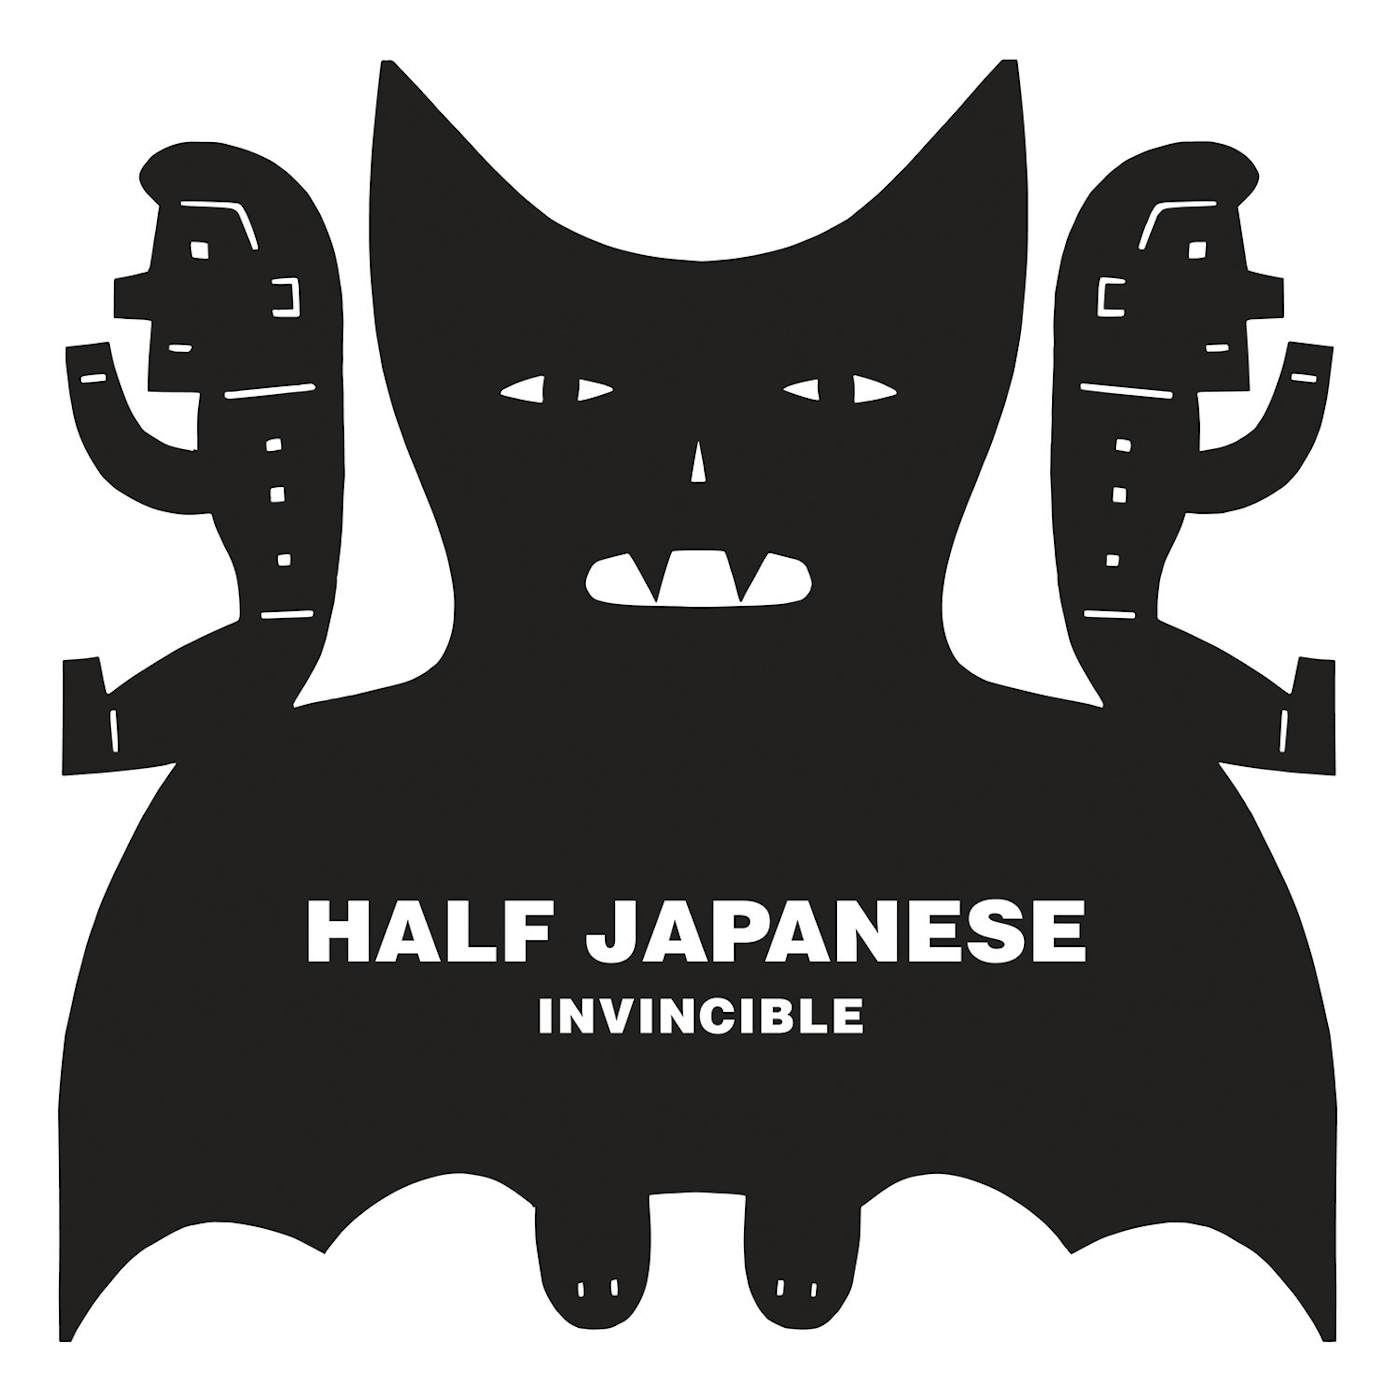 Half Japanese 'Invincible' Vinyl Record